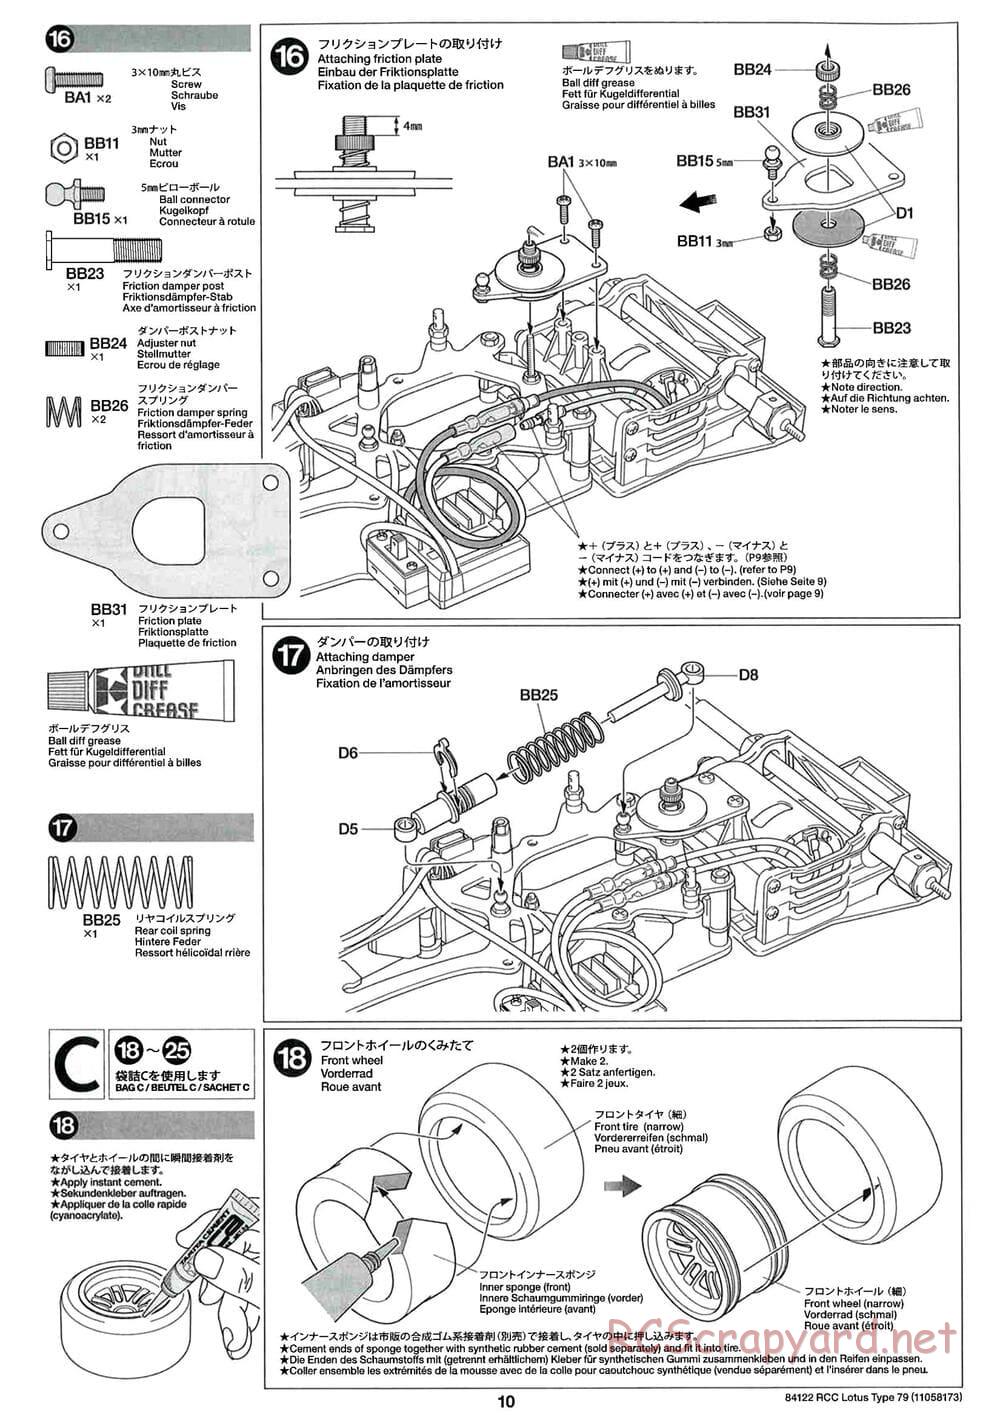 Tamiya - Lotus Type 79 - F104W Chassis - Manual - Page 10